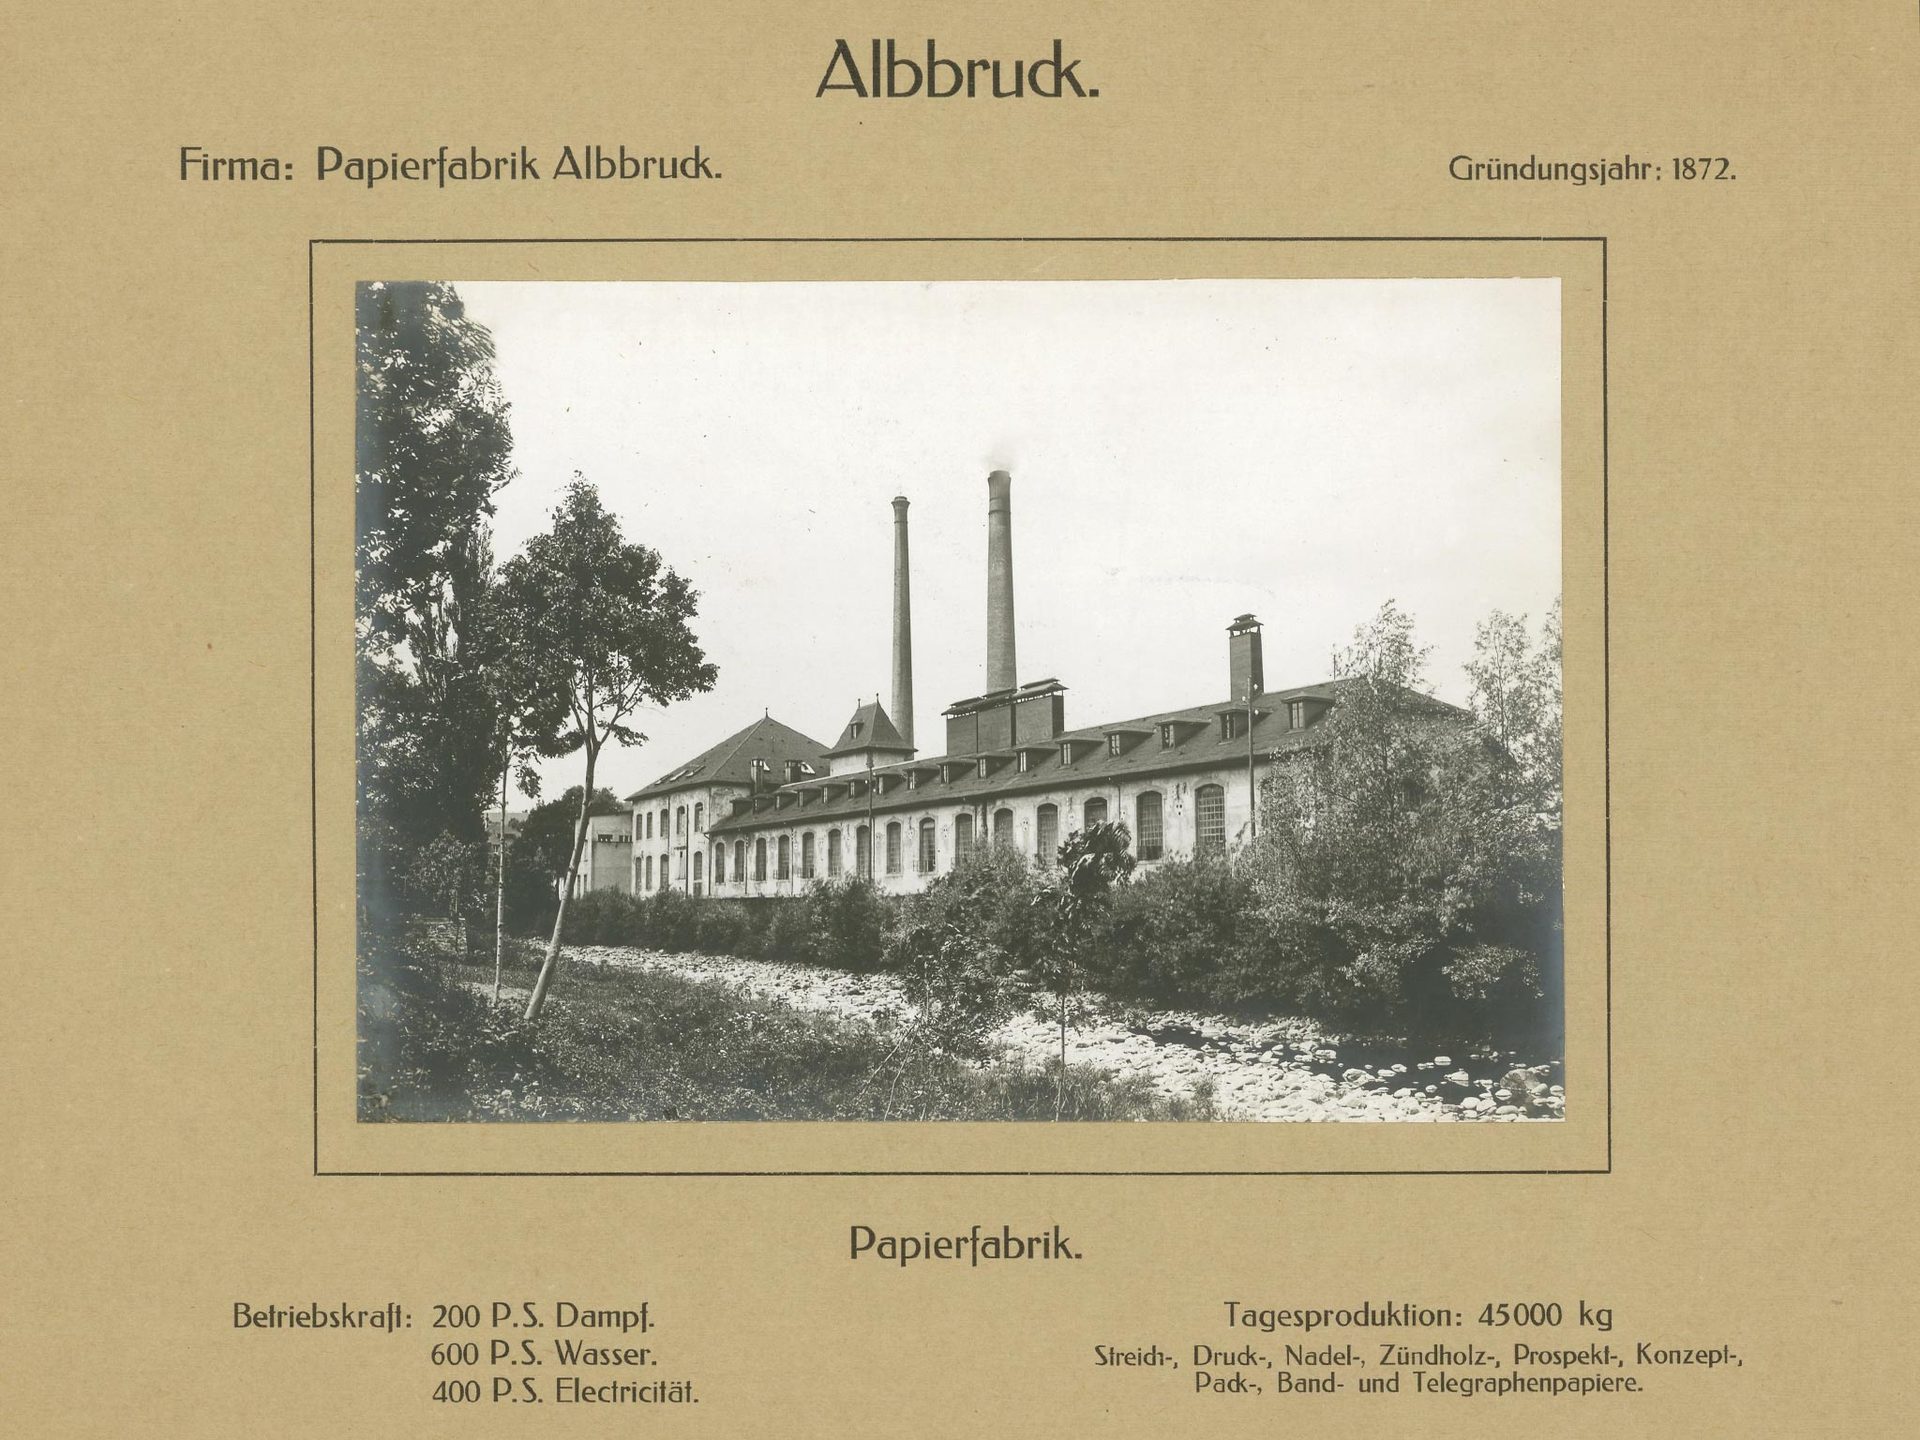 Papierfabrik Albbruck